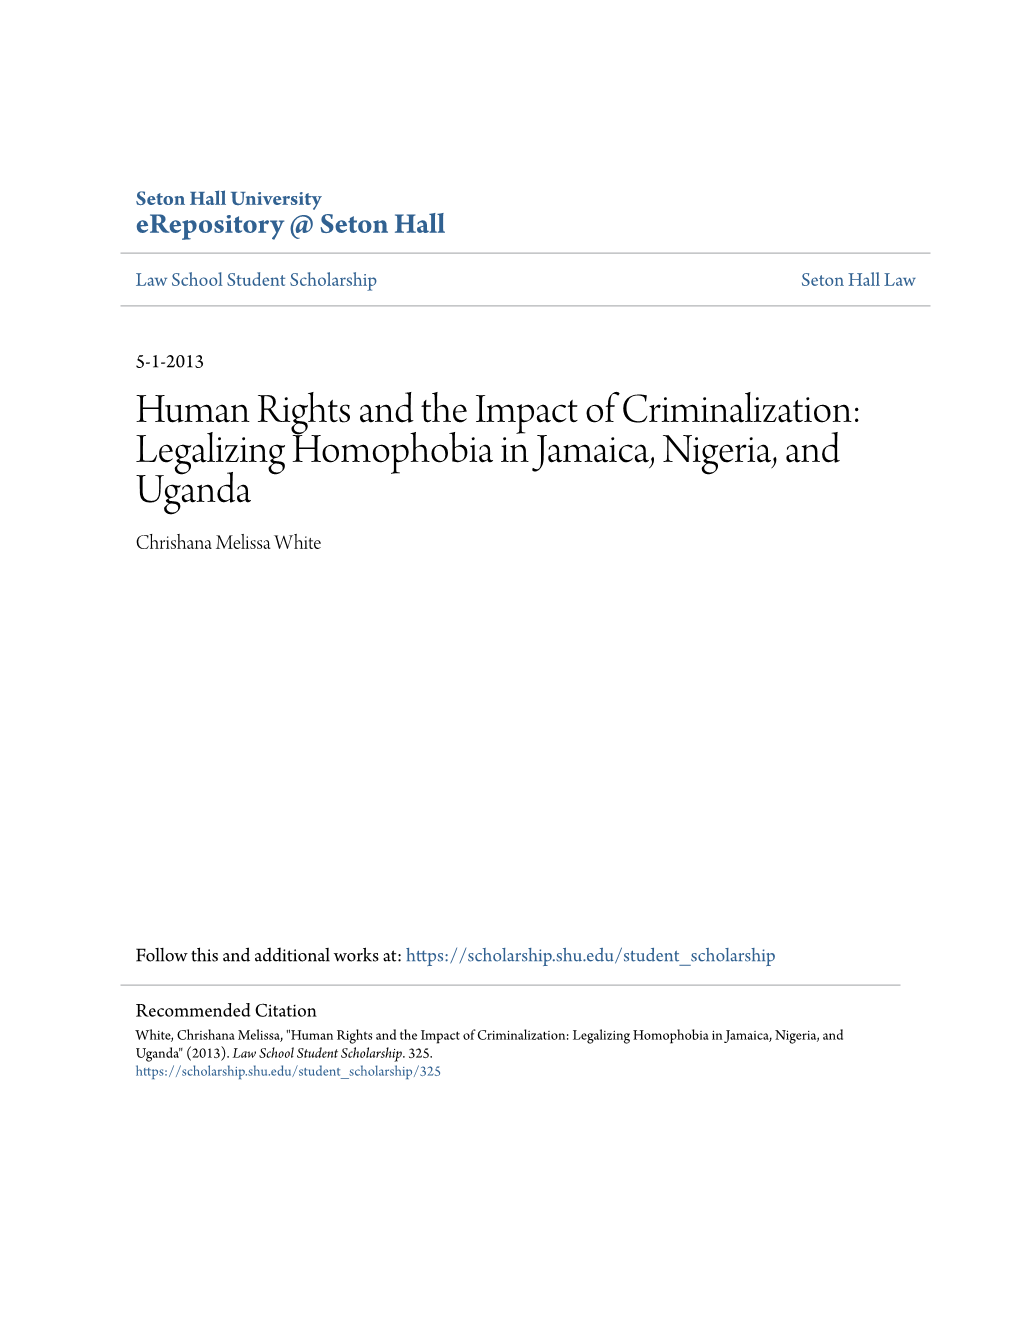 Human Rights and the Impact of Criminalization: Legalizing Homophobia in Jamaica, Nigeria, and Uganda Chrishana Melissa White